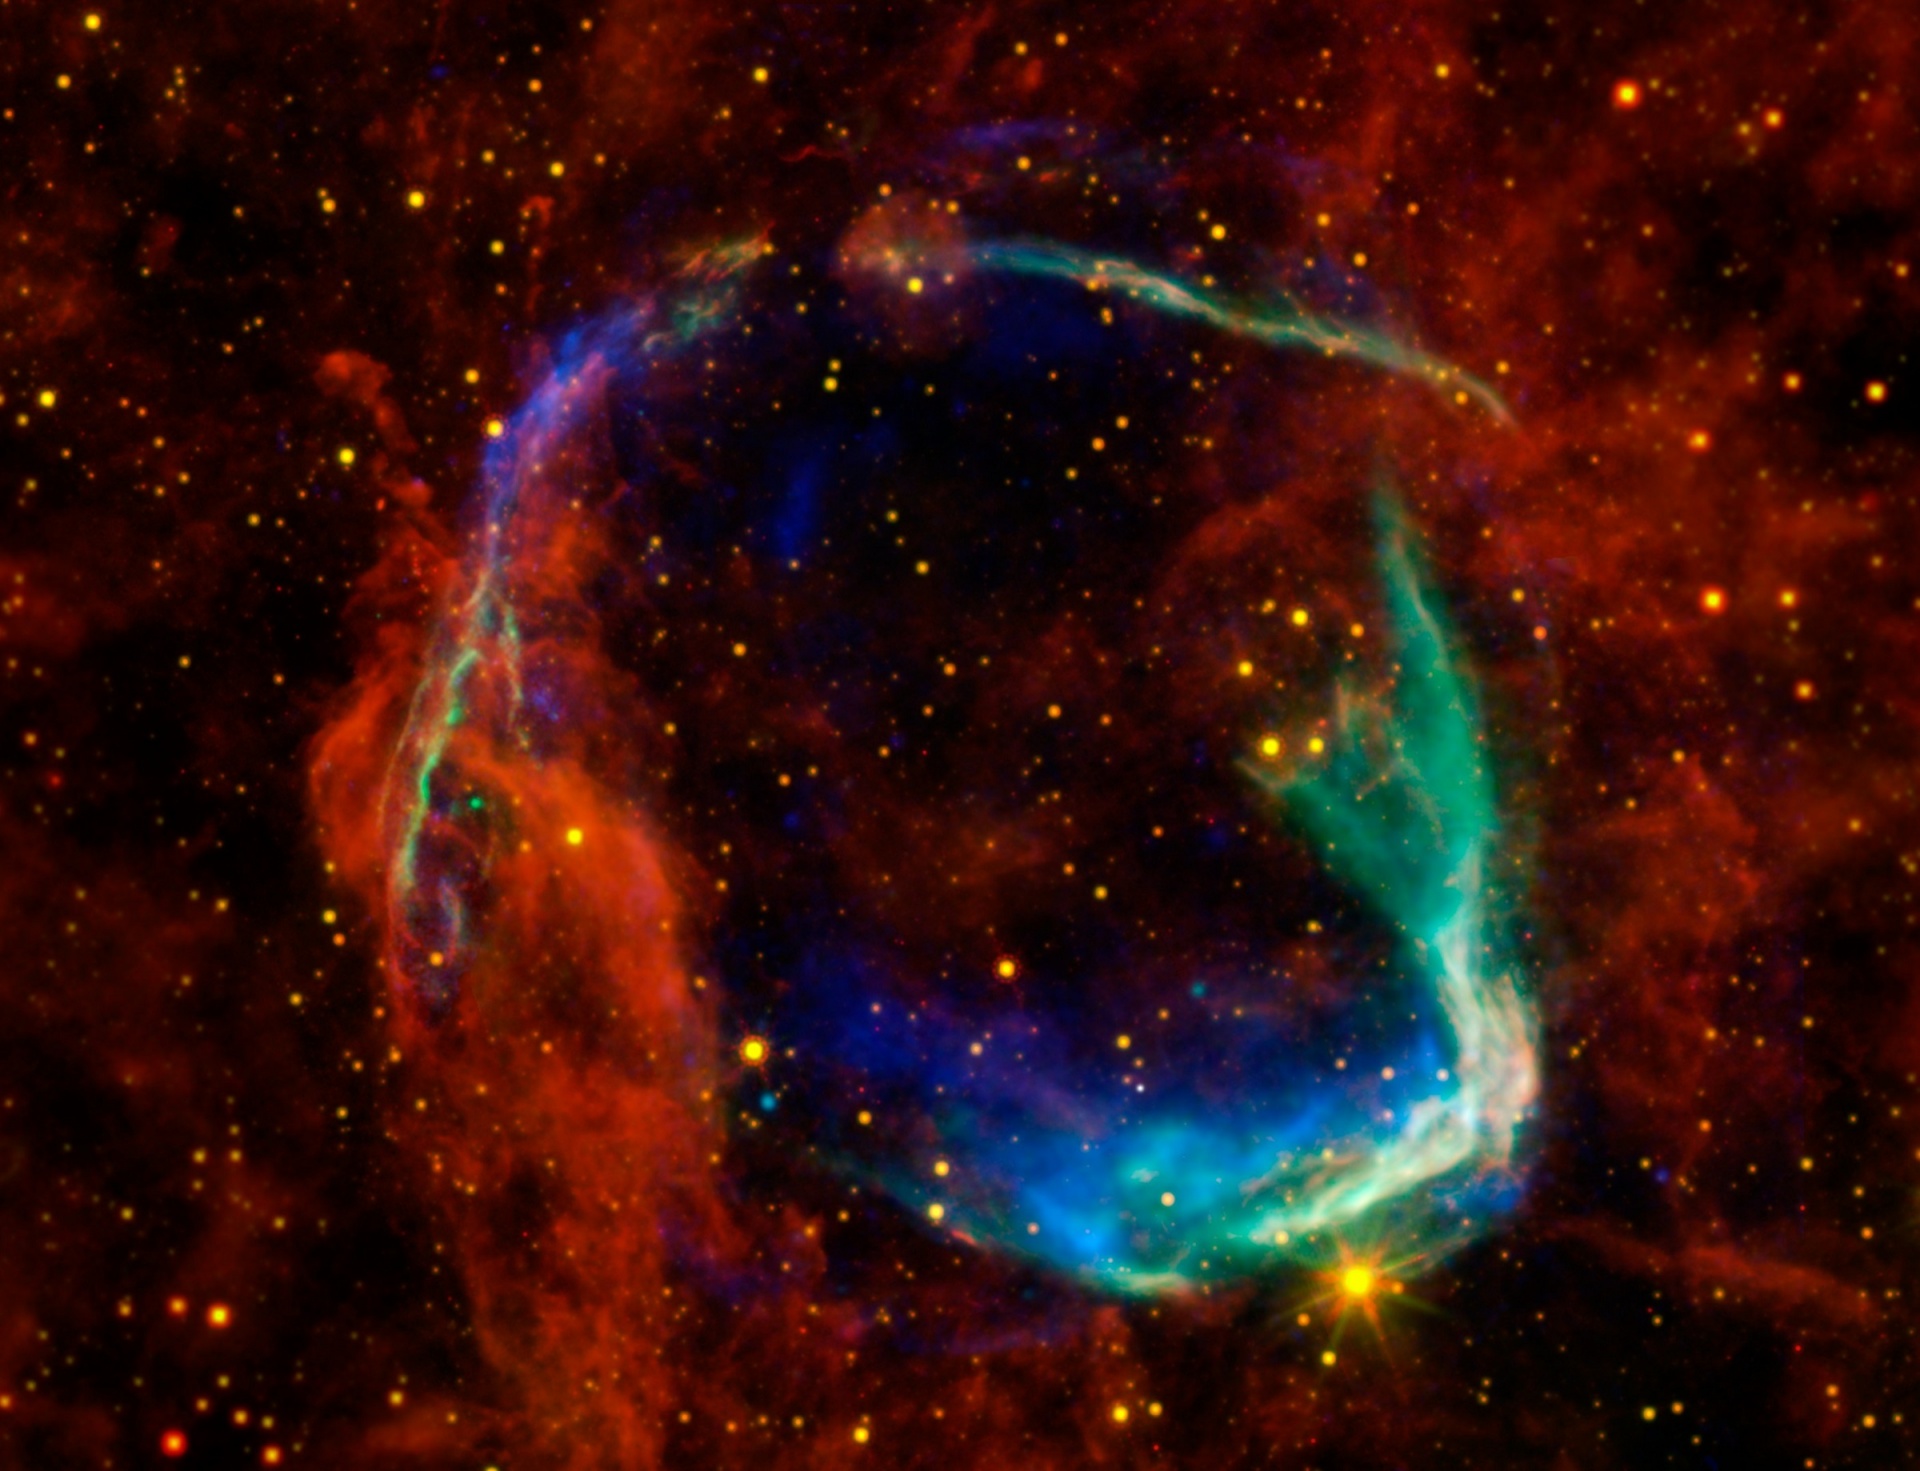 supernova rcw 86 cosmos free photo